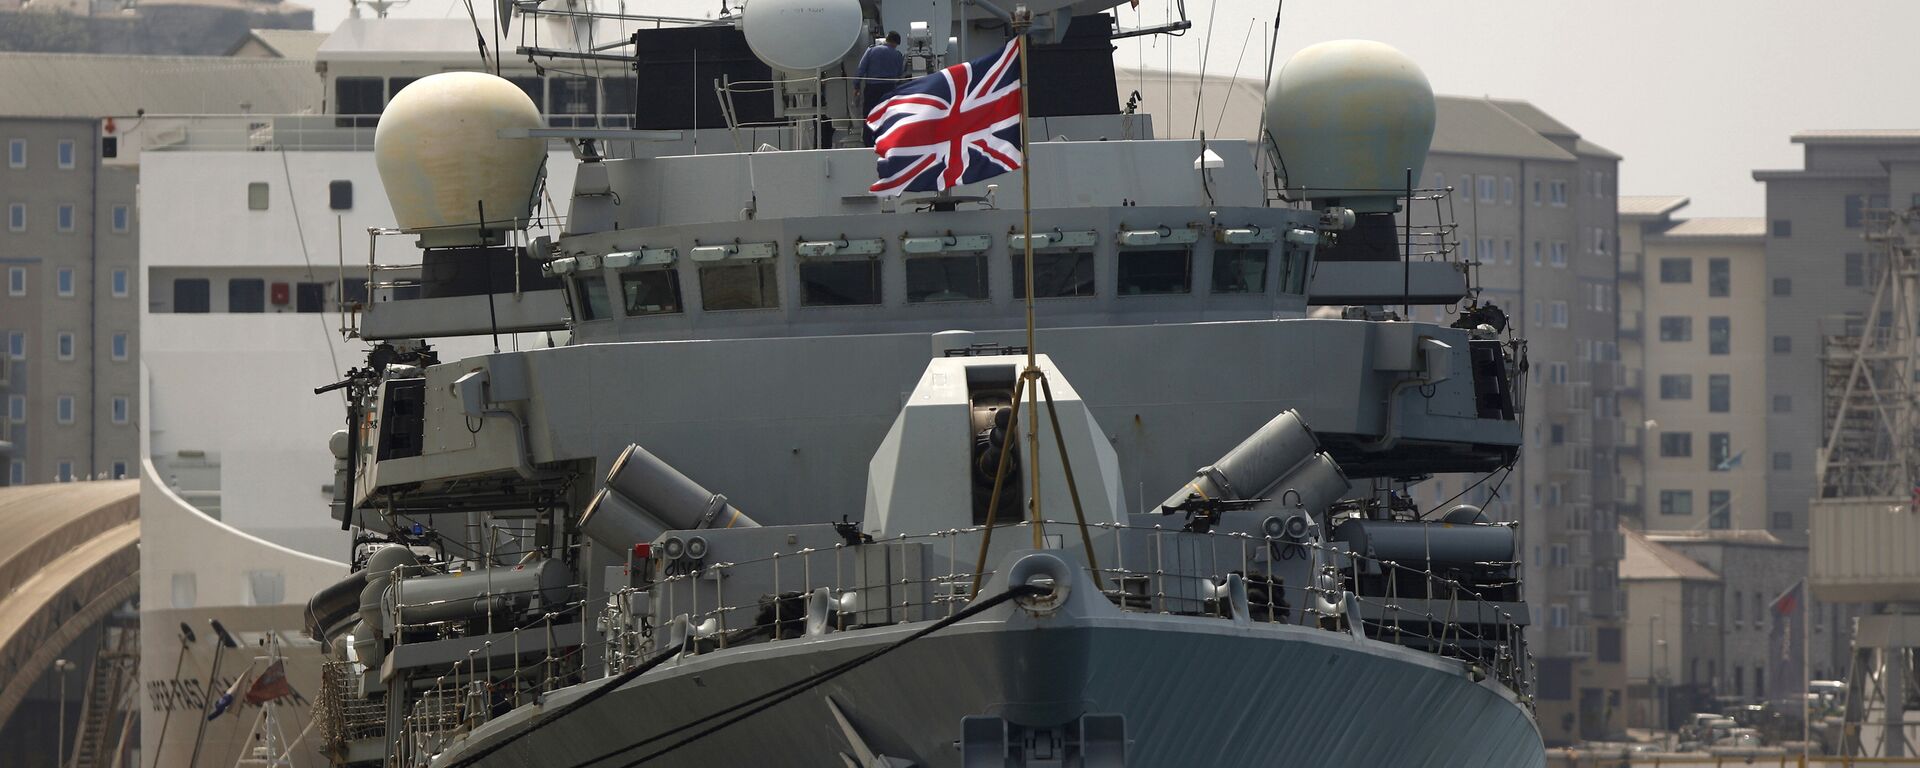 Britain's Royal Navy warship HMS Westminster sits docked in Gibraltar, Monday, Aug. 19, 2013 - Sputnik International, 1920, 24.11.2020